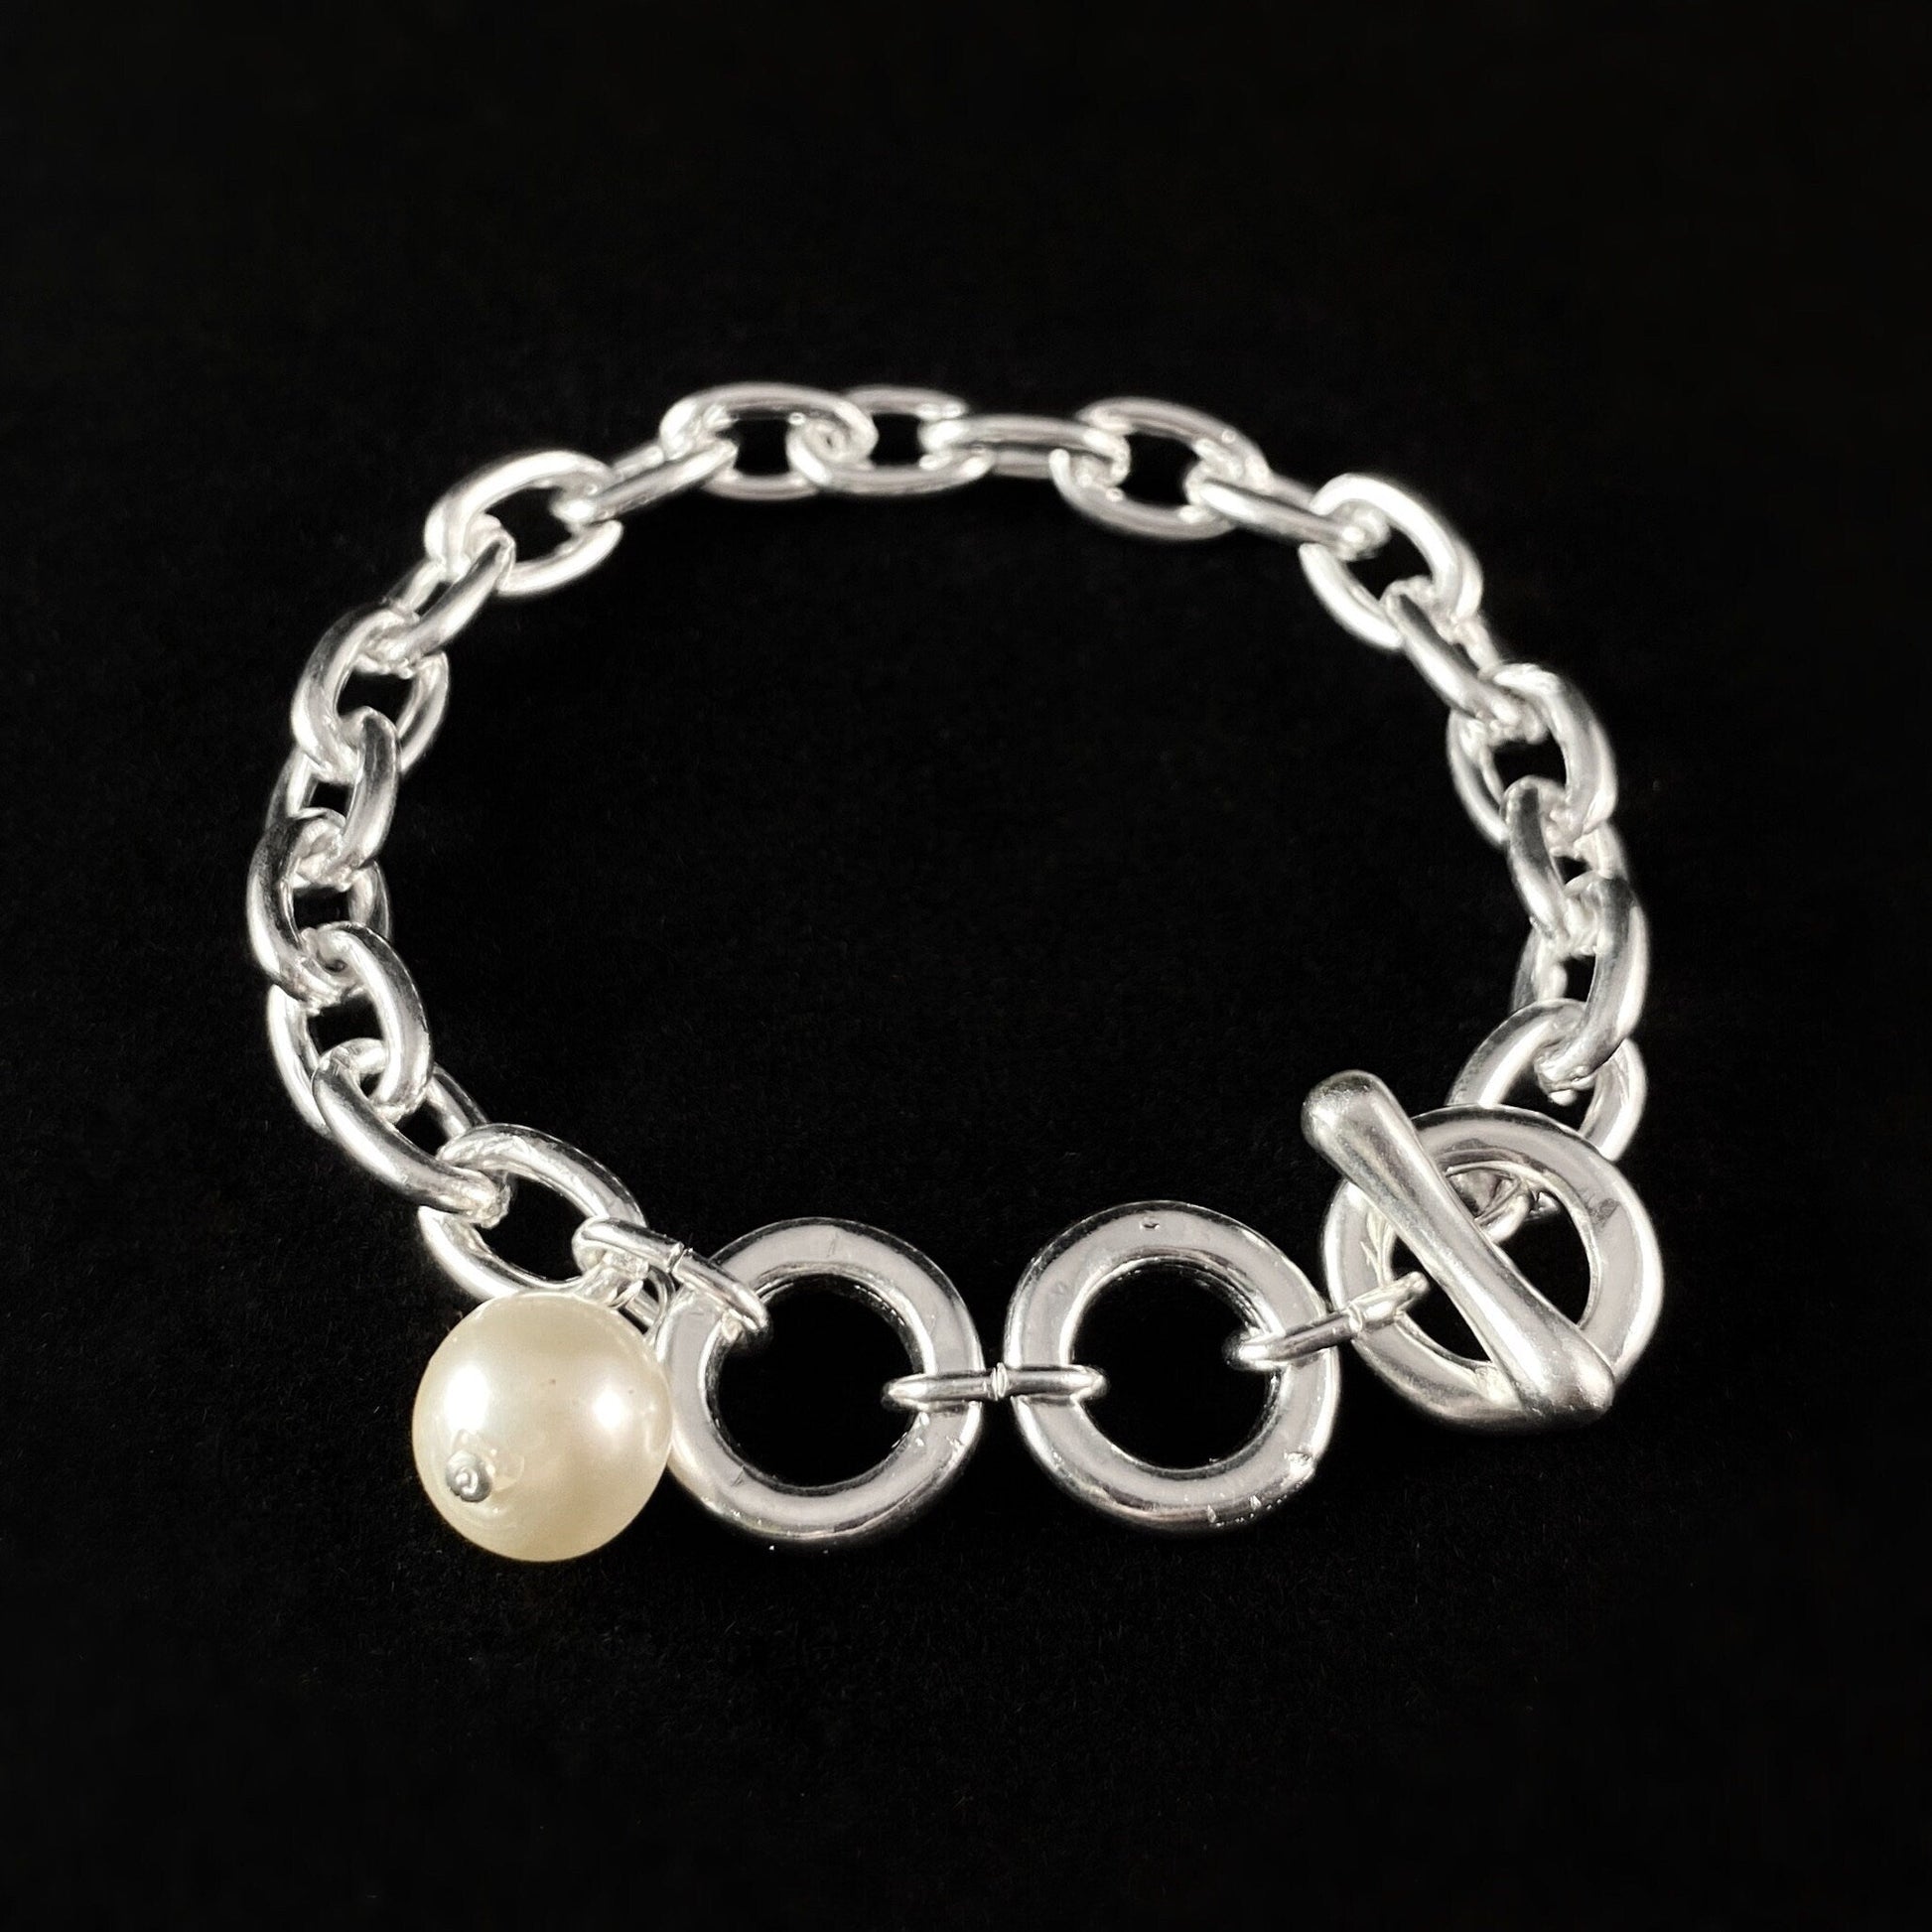 Silver Chain Bracelet with Dainty Pearl Charm - Handmade Nickel Free Ulla Jewelry